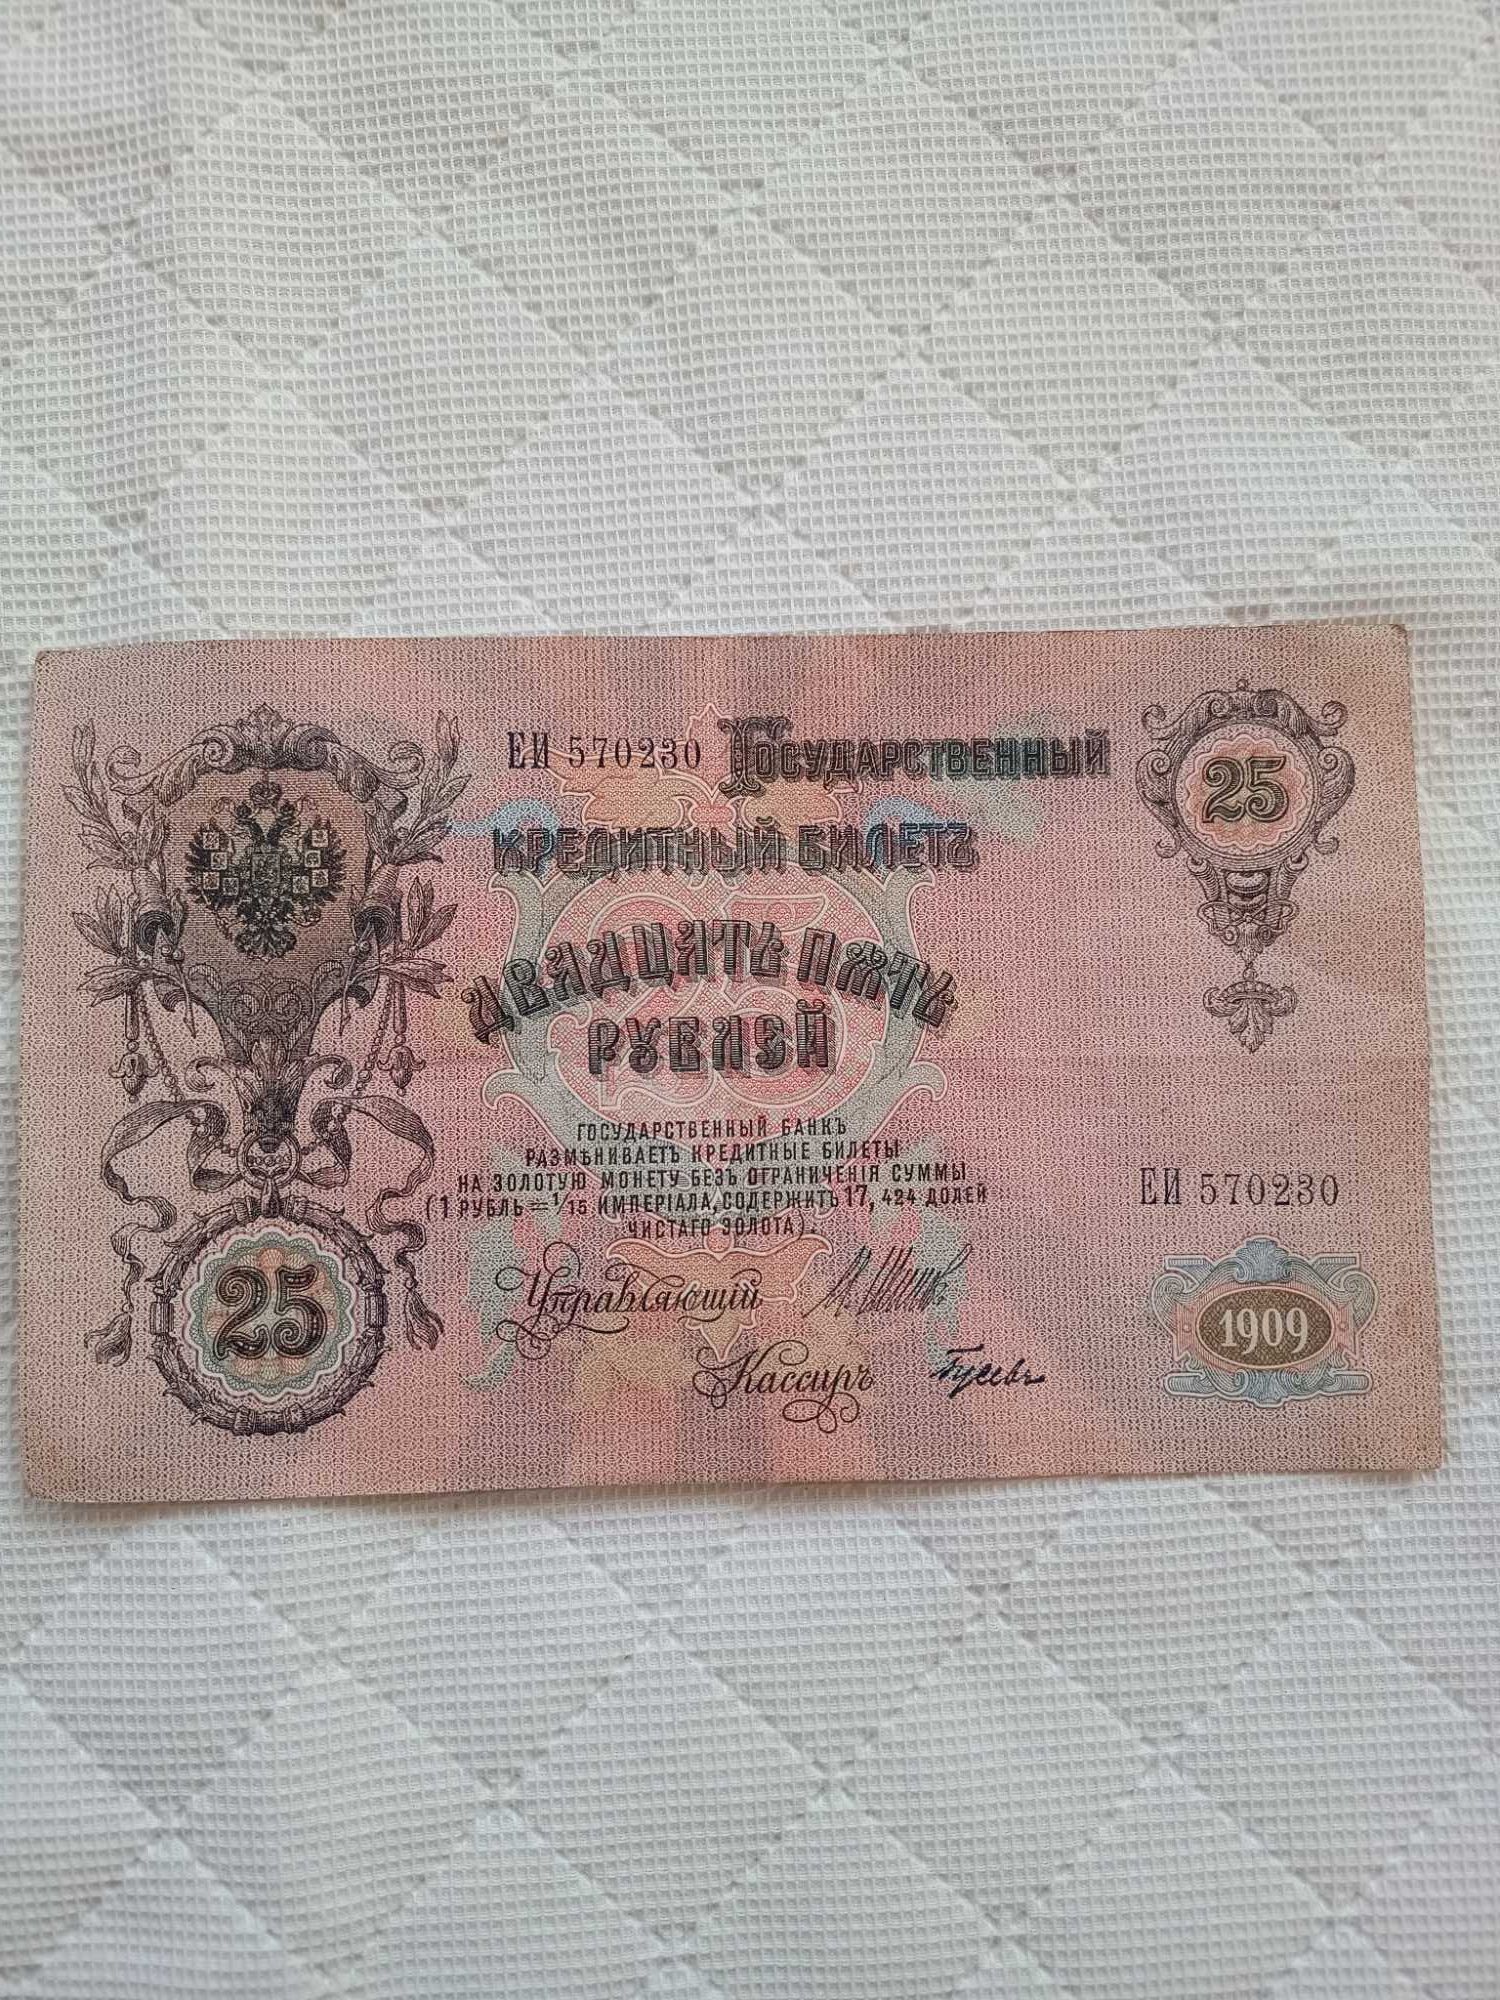 25 rubli z 1909 roku